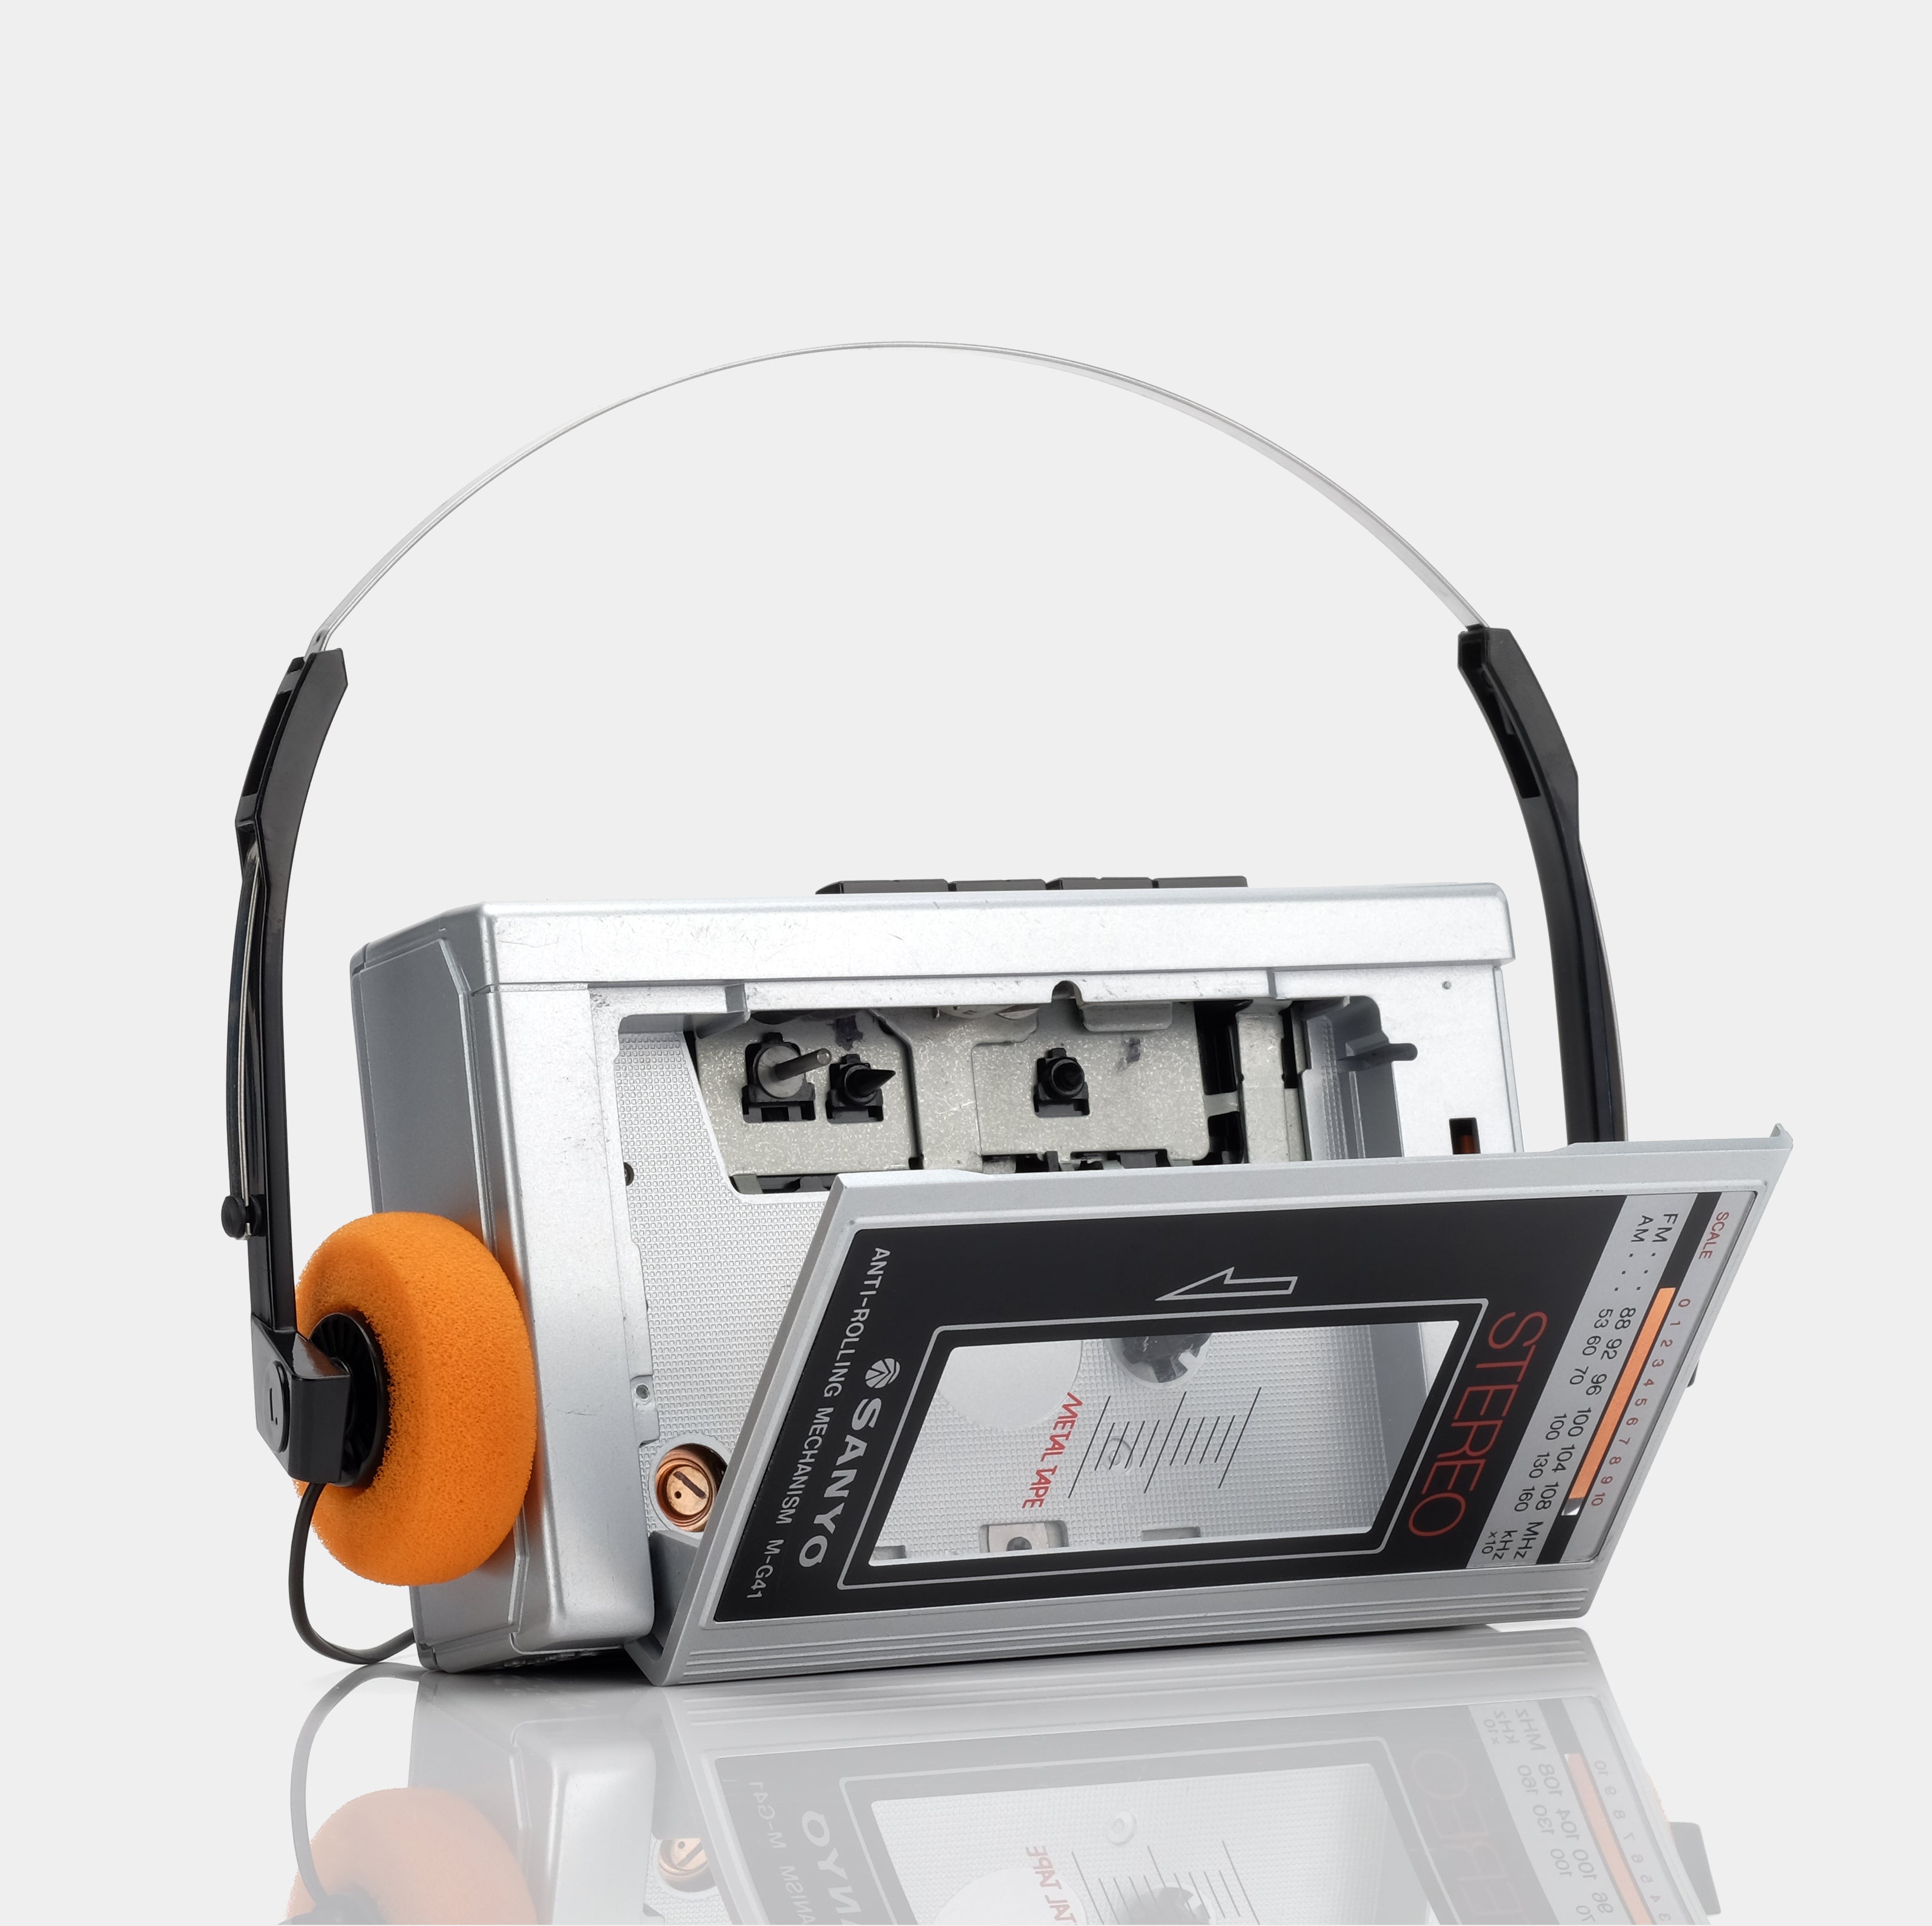 Sanyo Stereo M-G41 AM/FM Portable Cassette Player